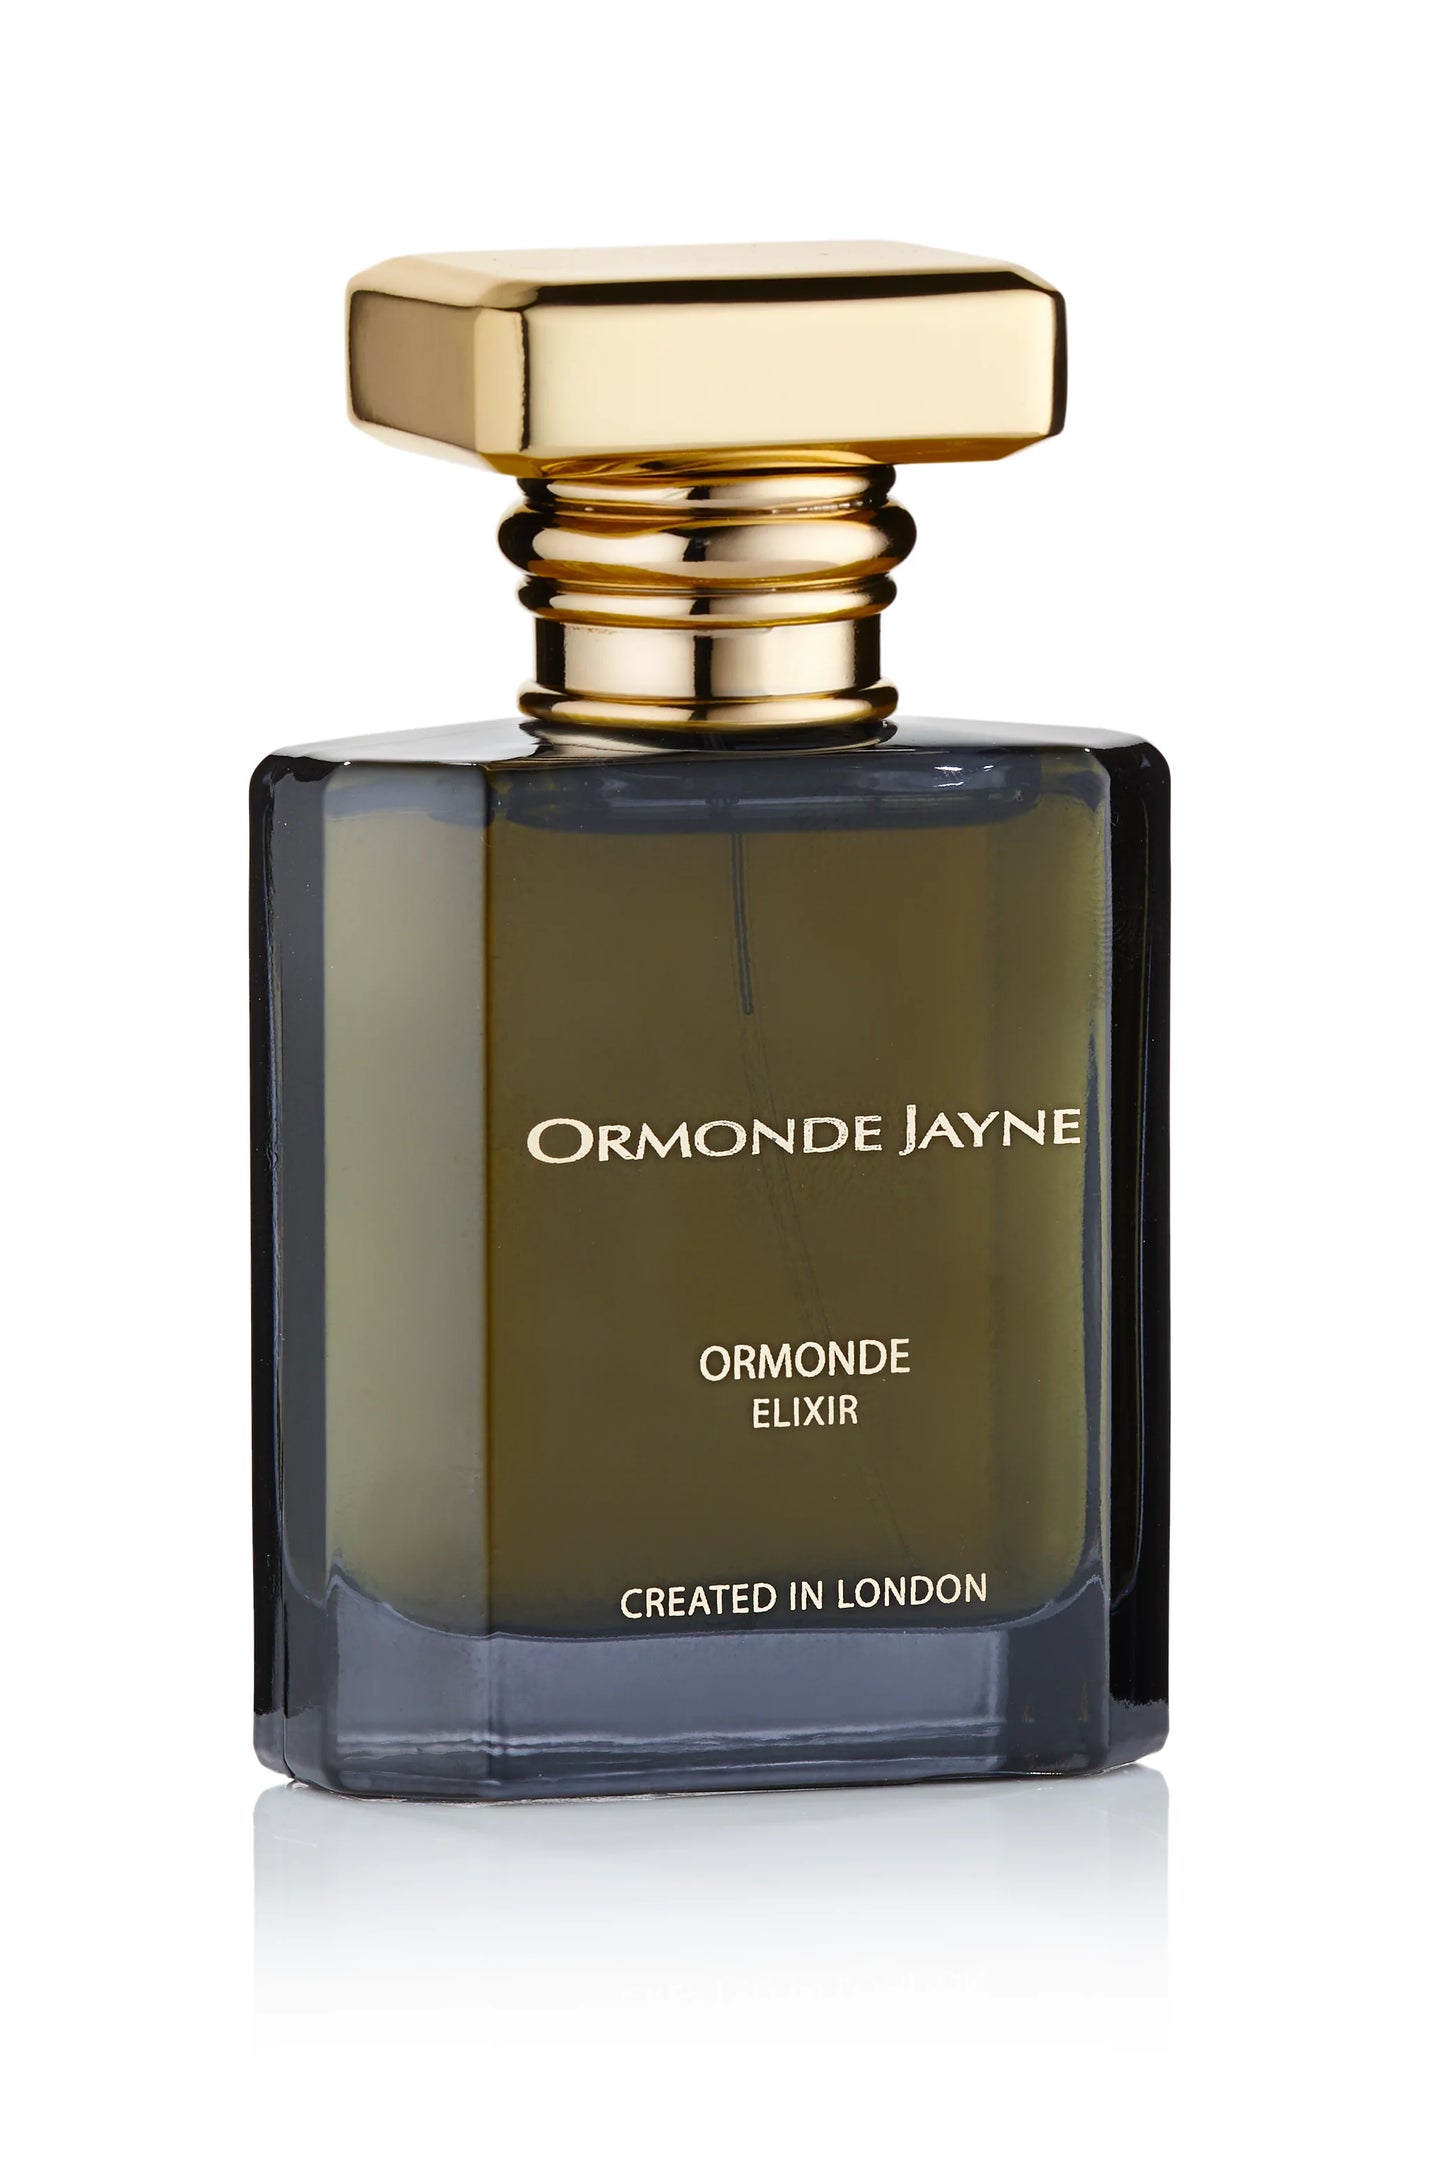 Ormonde Jayne Ormonde Elixir 2ml 0.06 fl. oz ametlik lõhnaproov